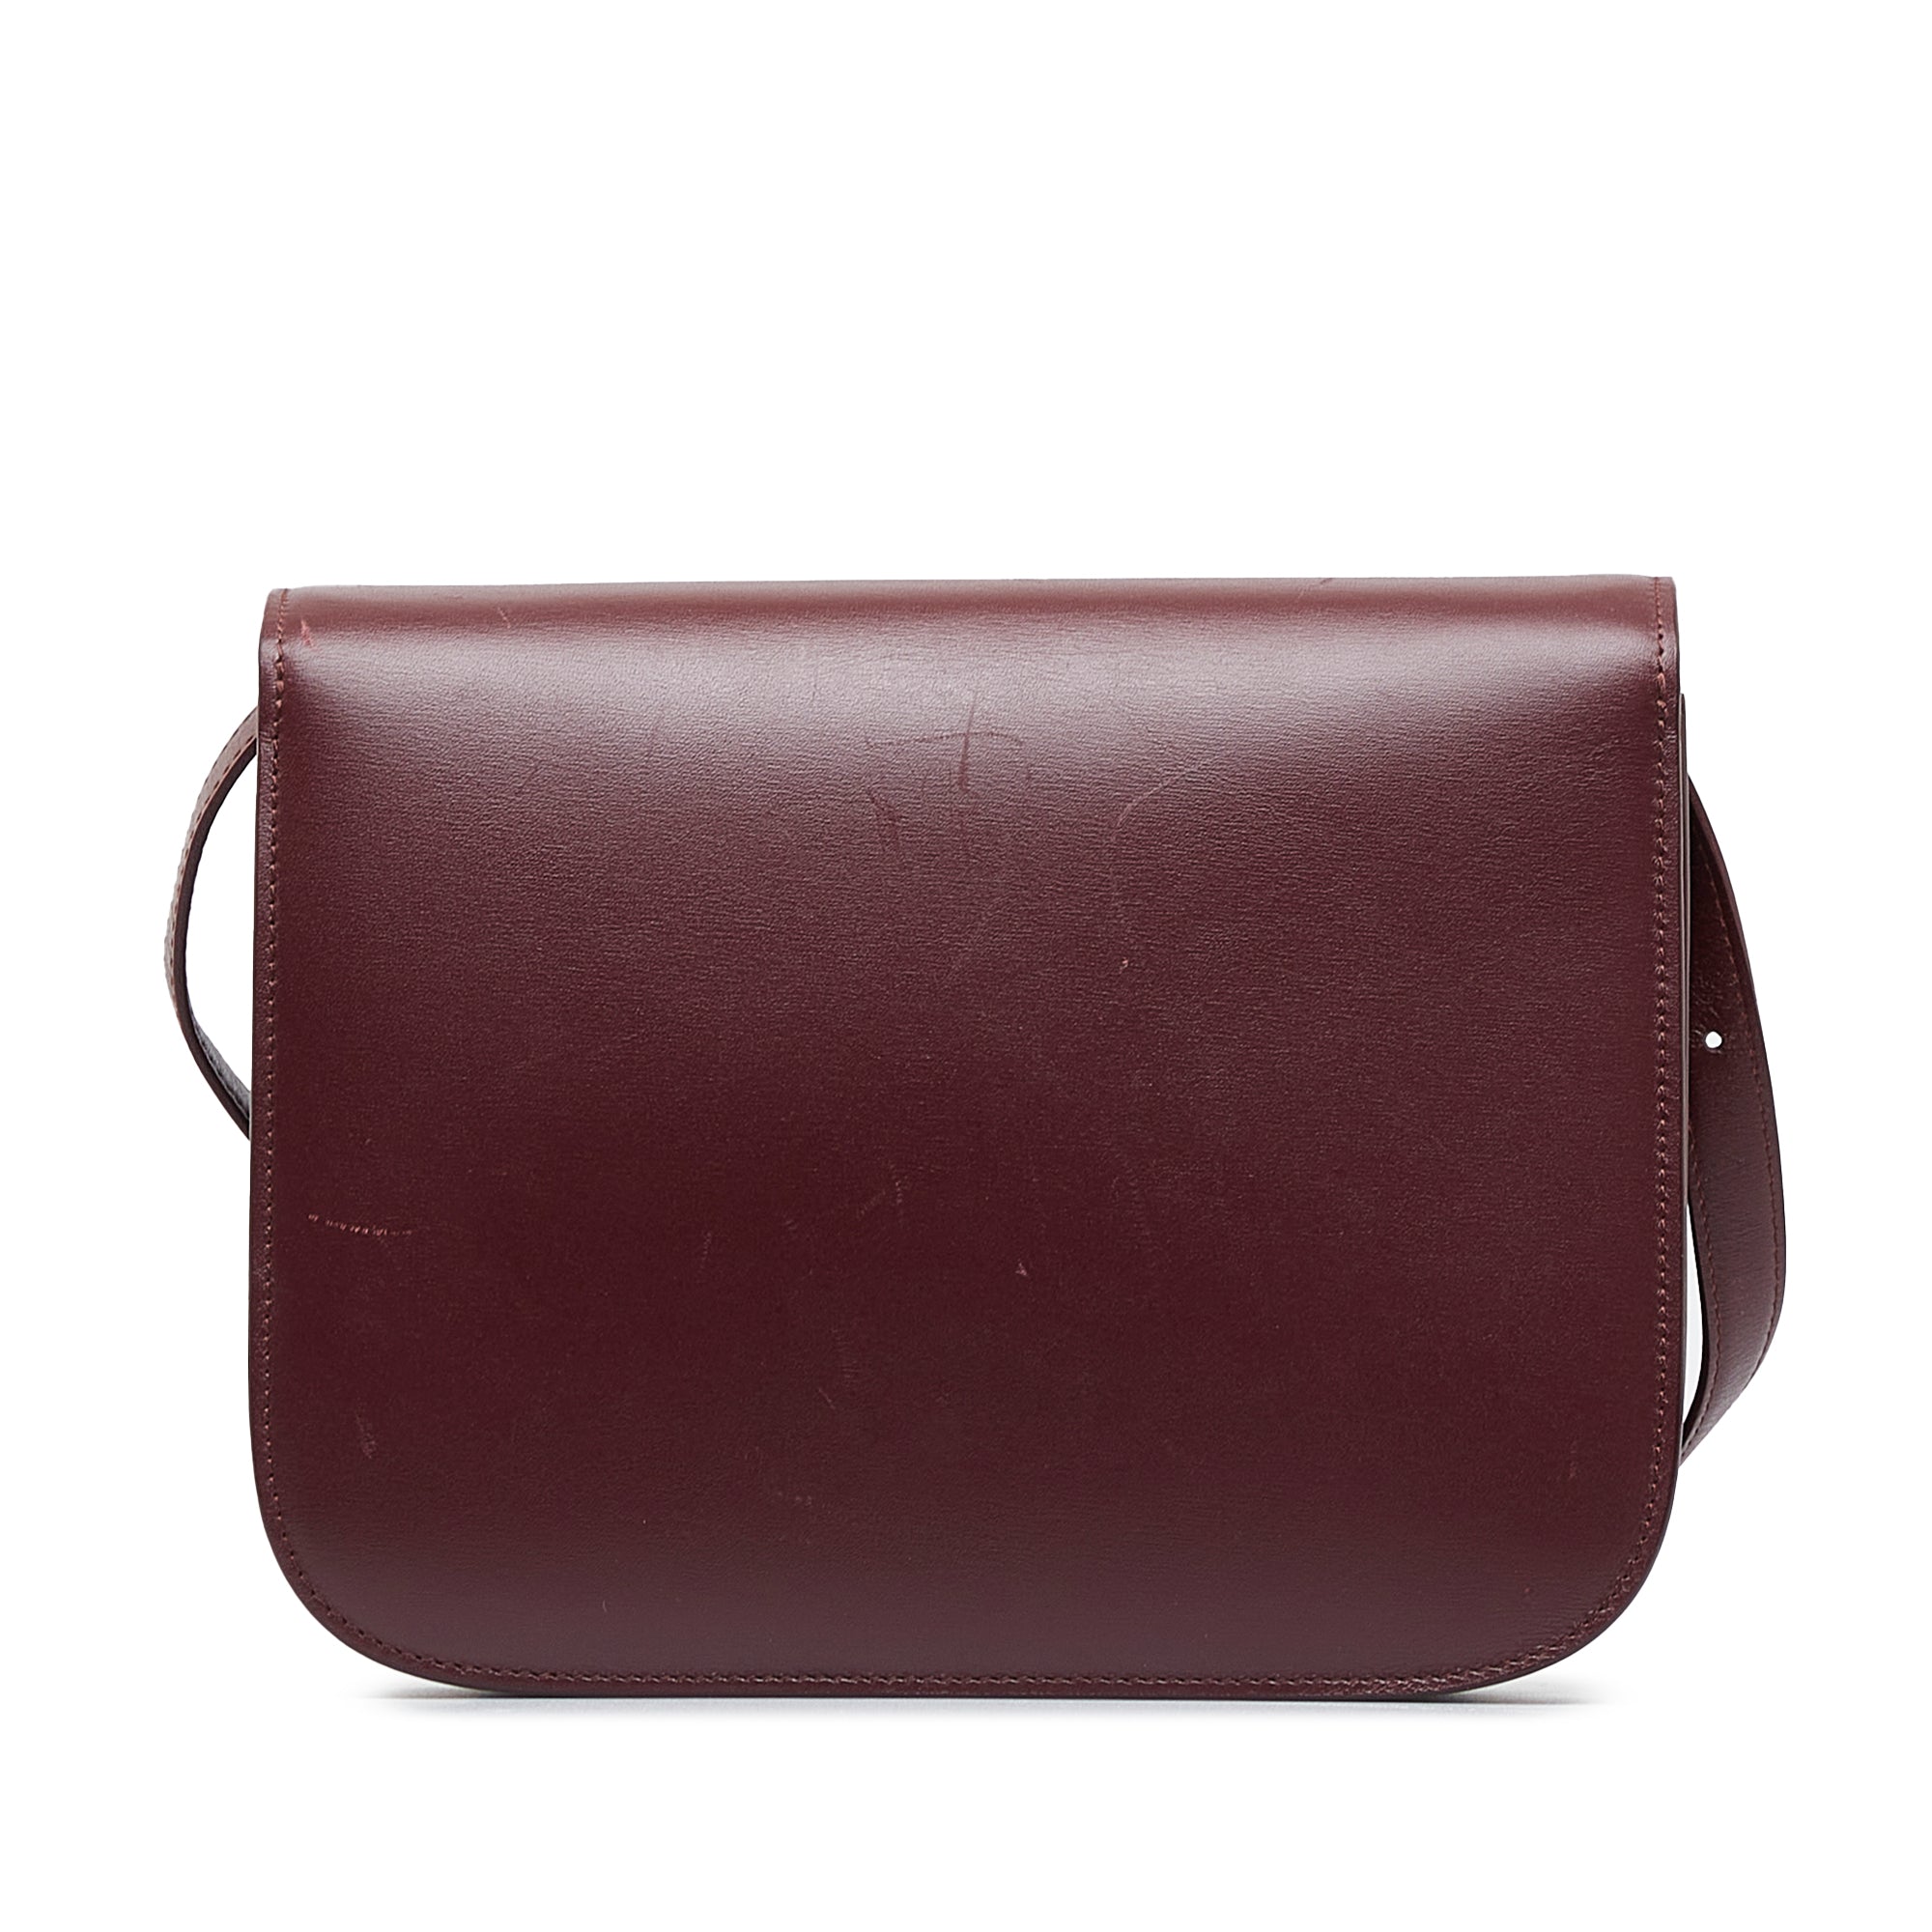 Celine Authenticated Classic Leather Handbag